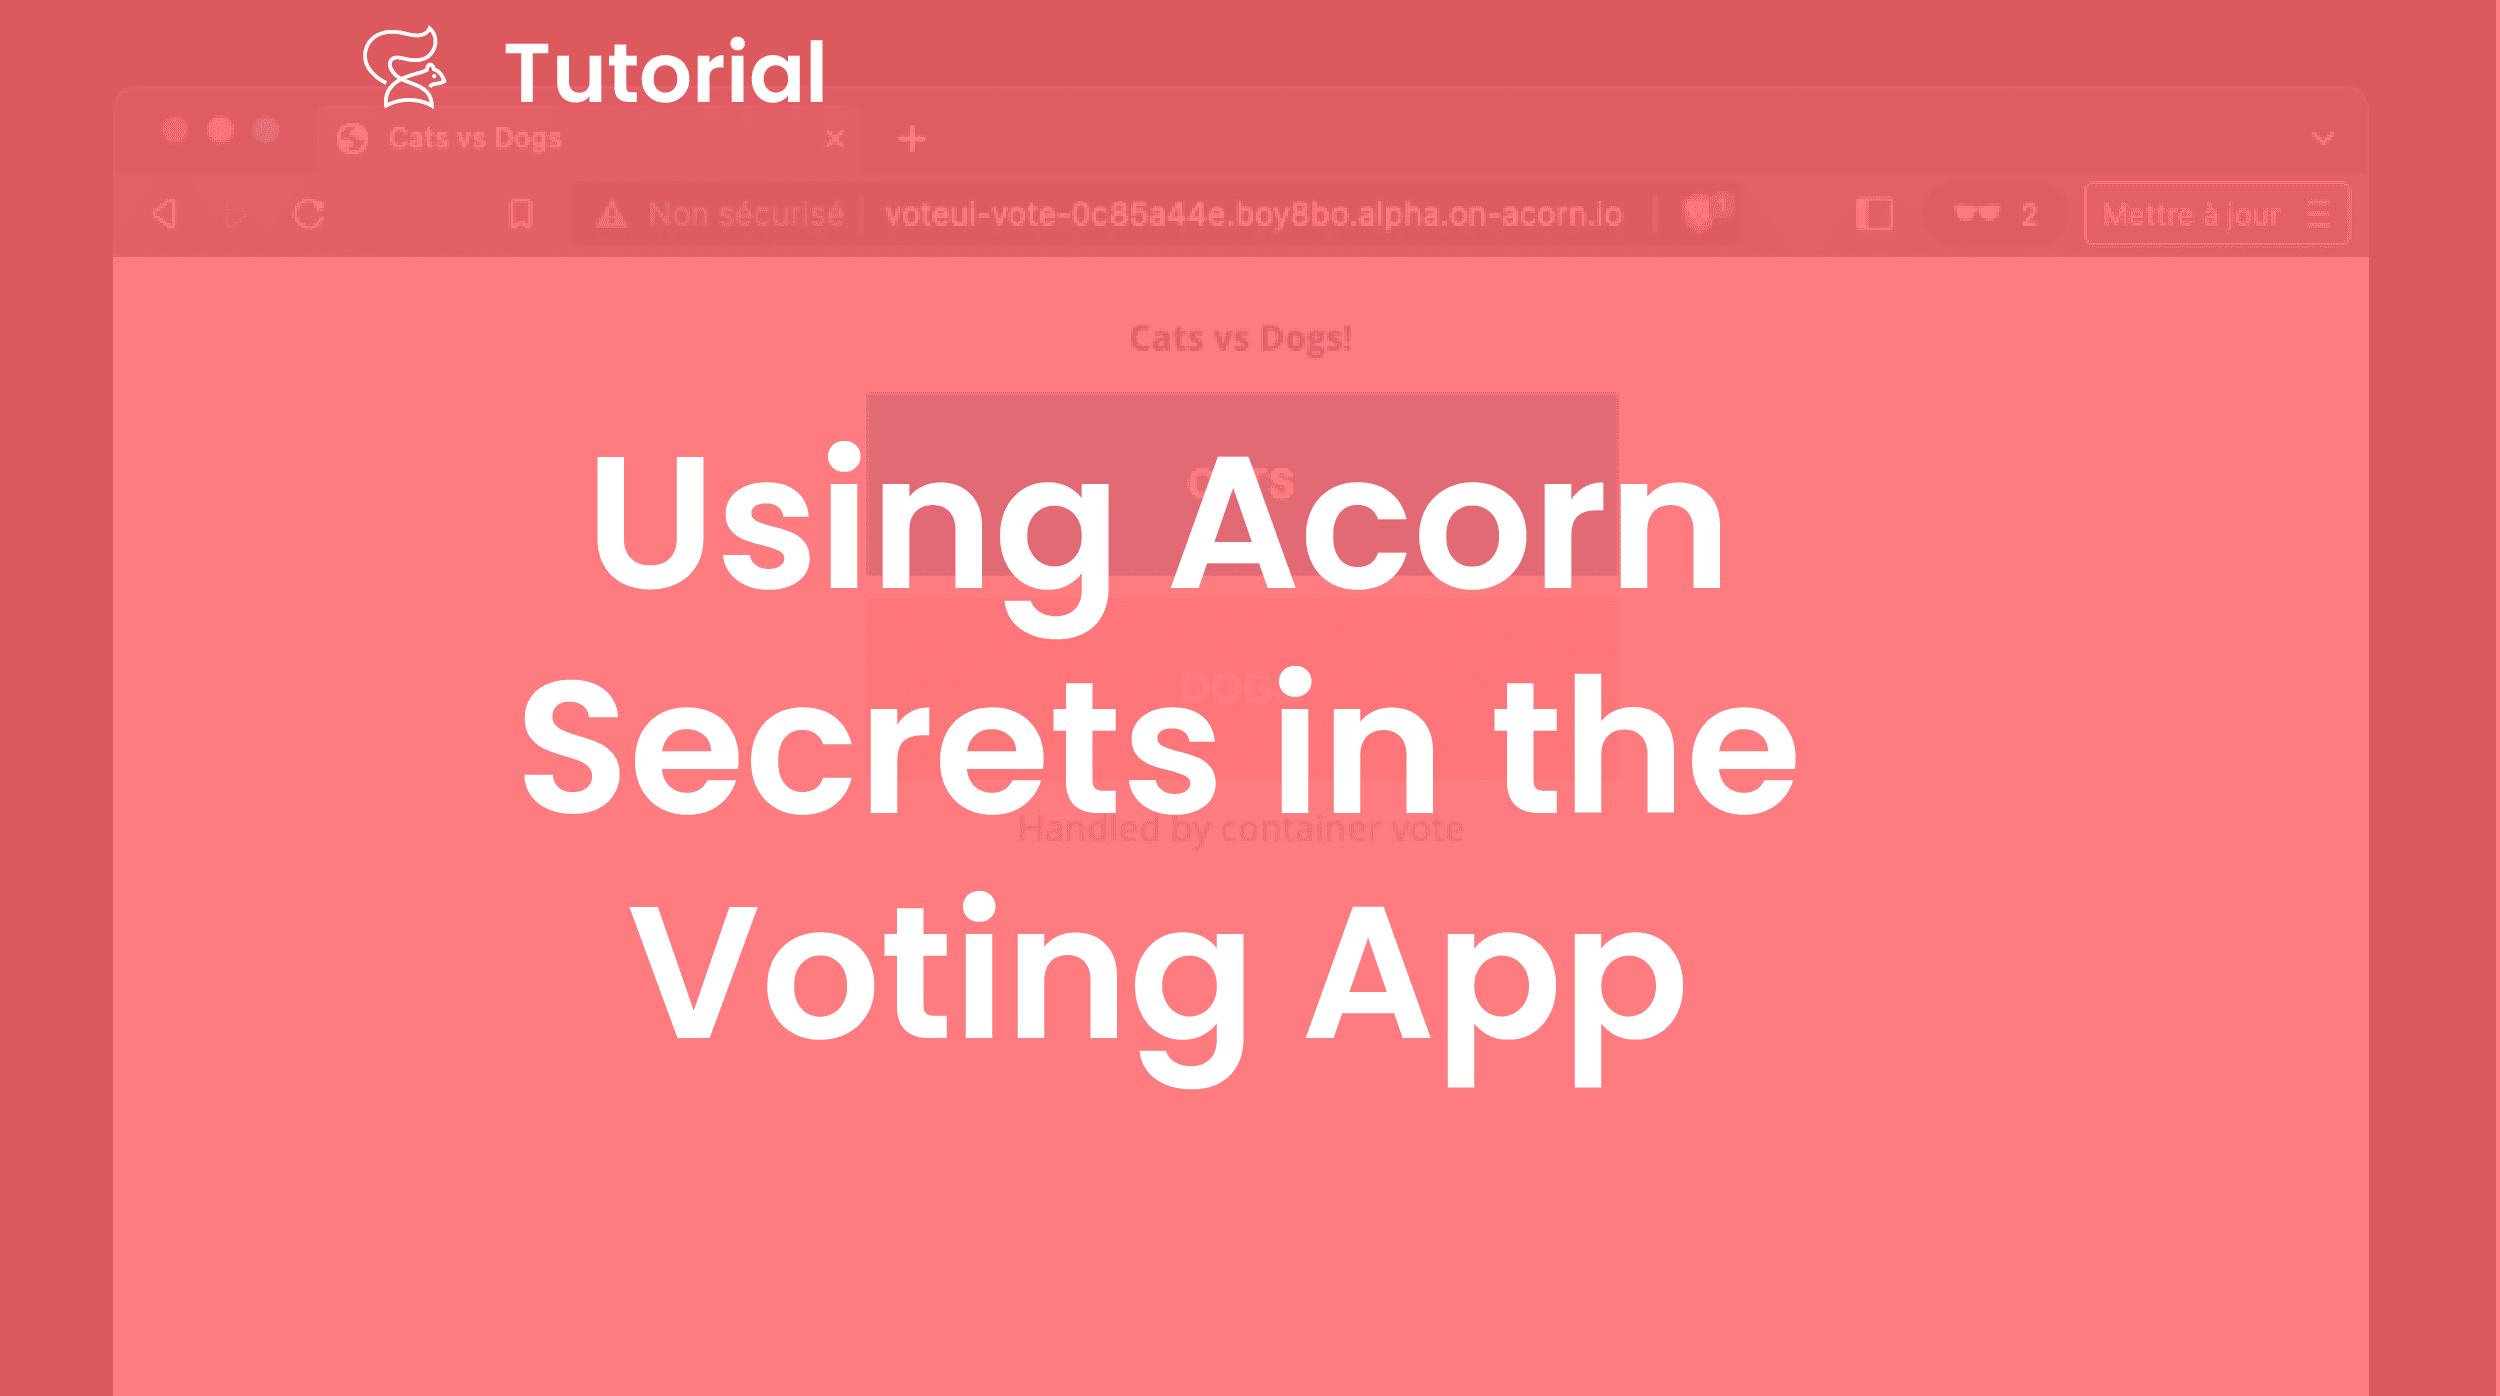 Using Acorn secrets in the Voting App